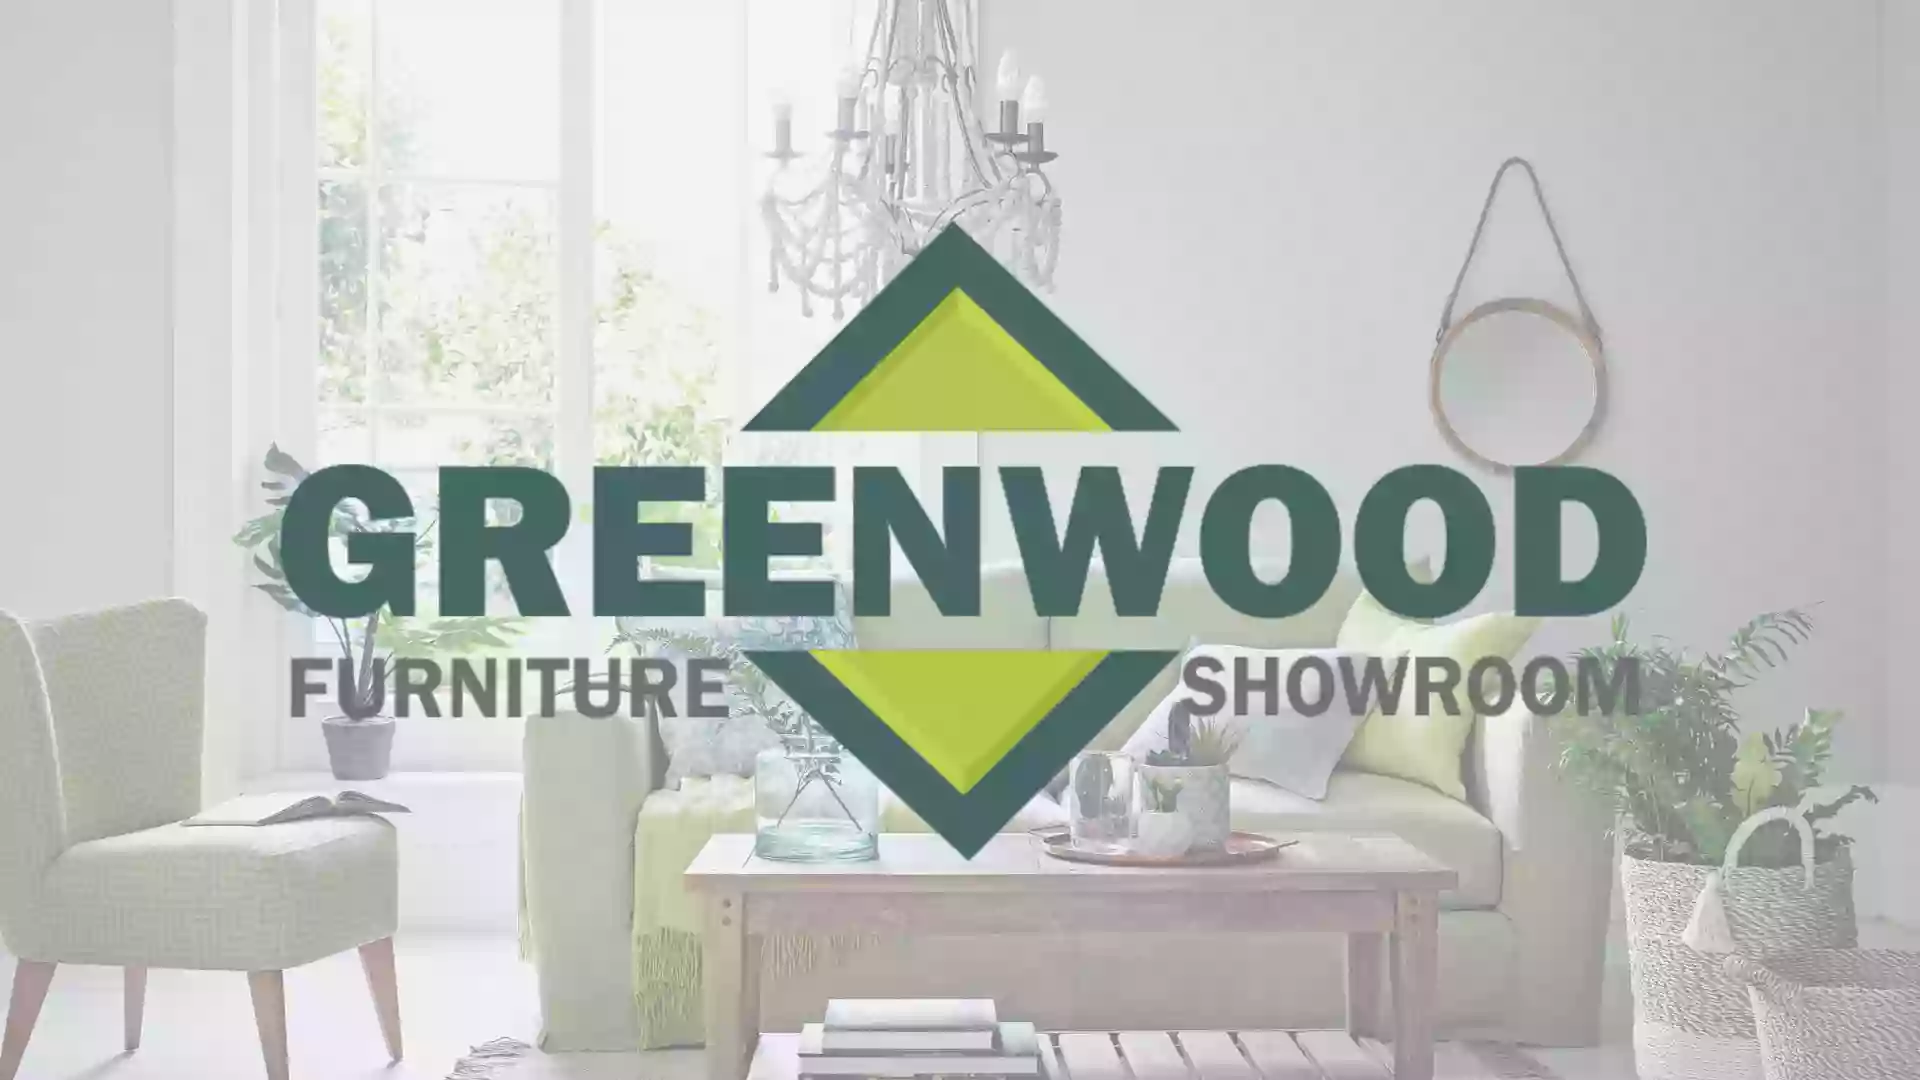 Greenwood Furniture